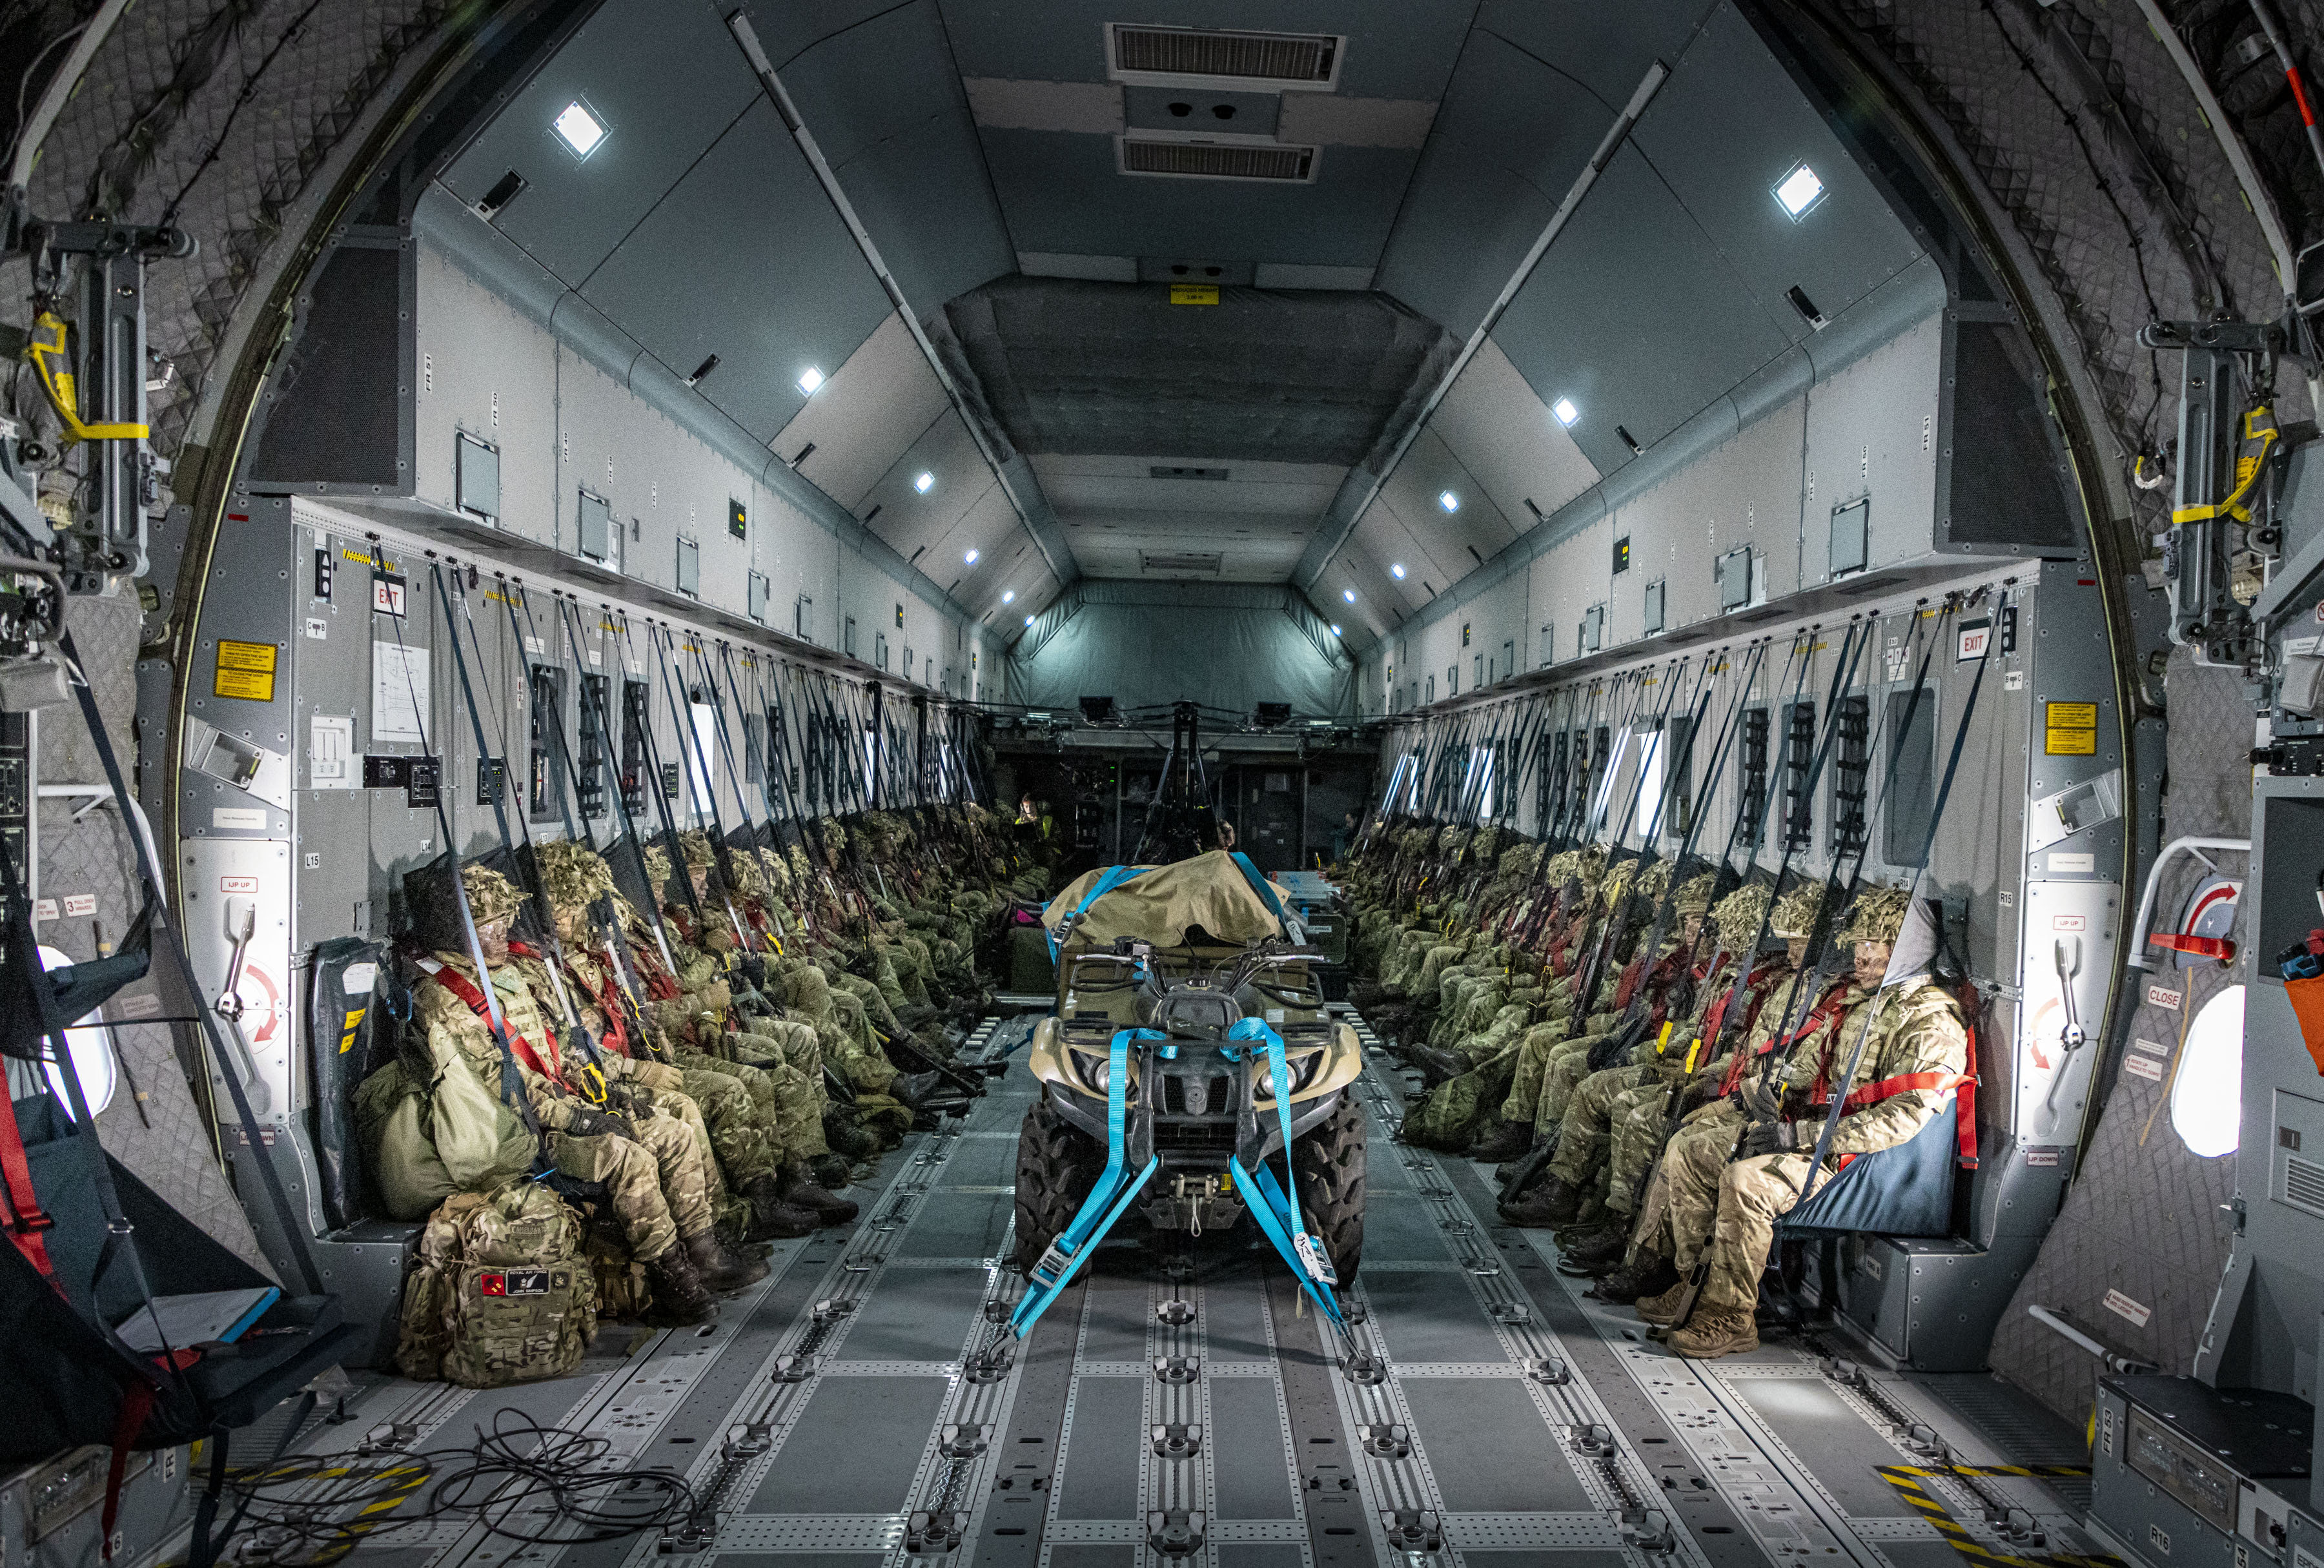 Image shows RAF aviators inside aircraft carrier.